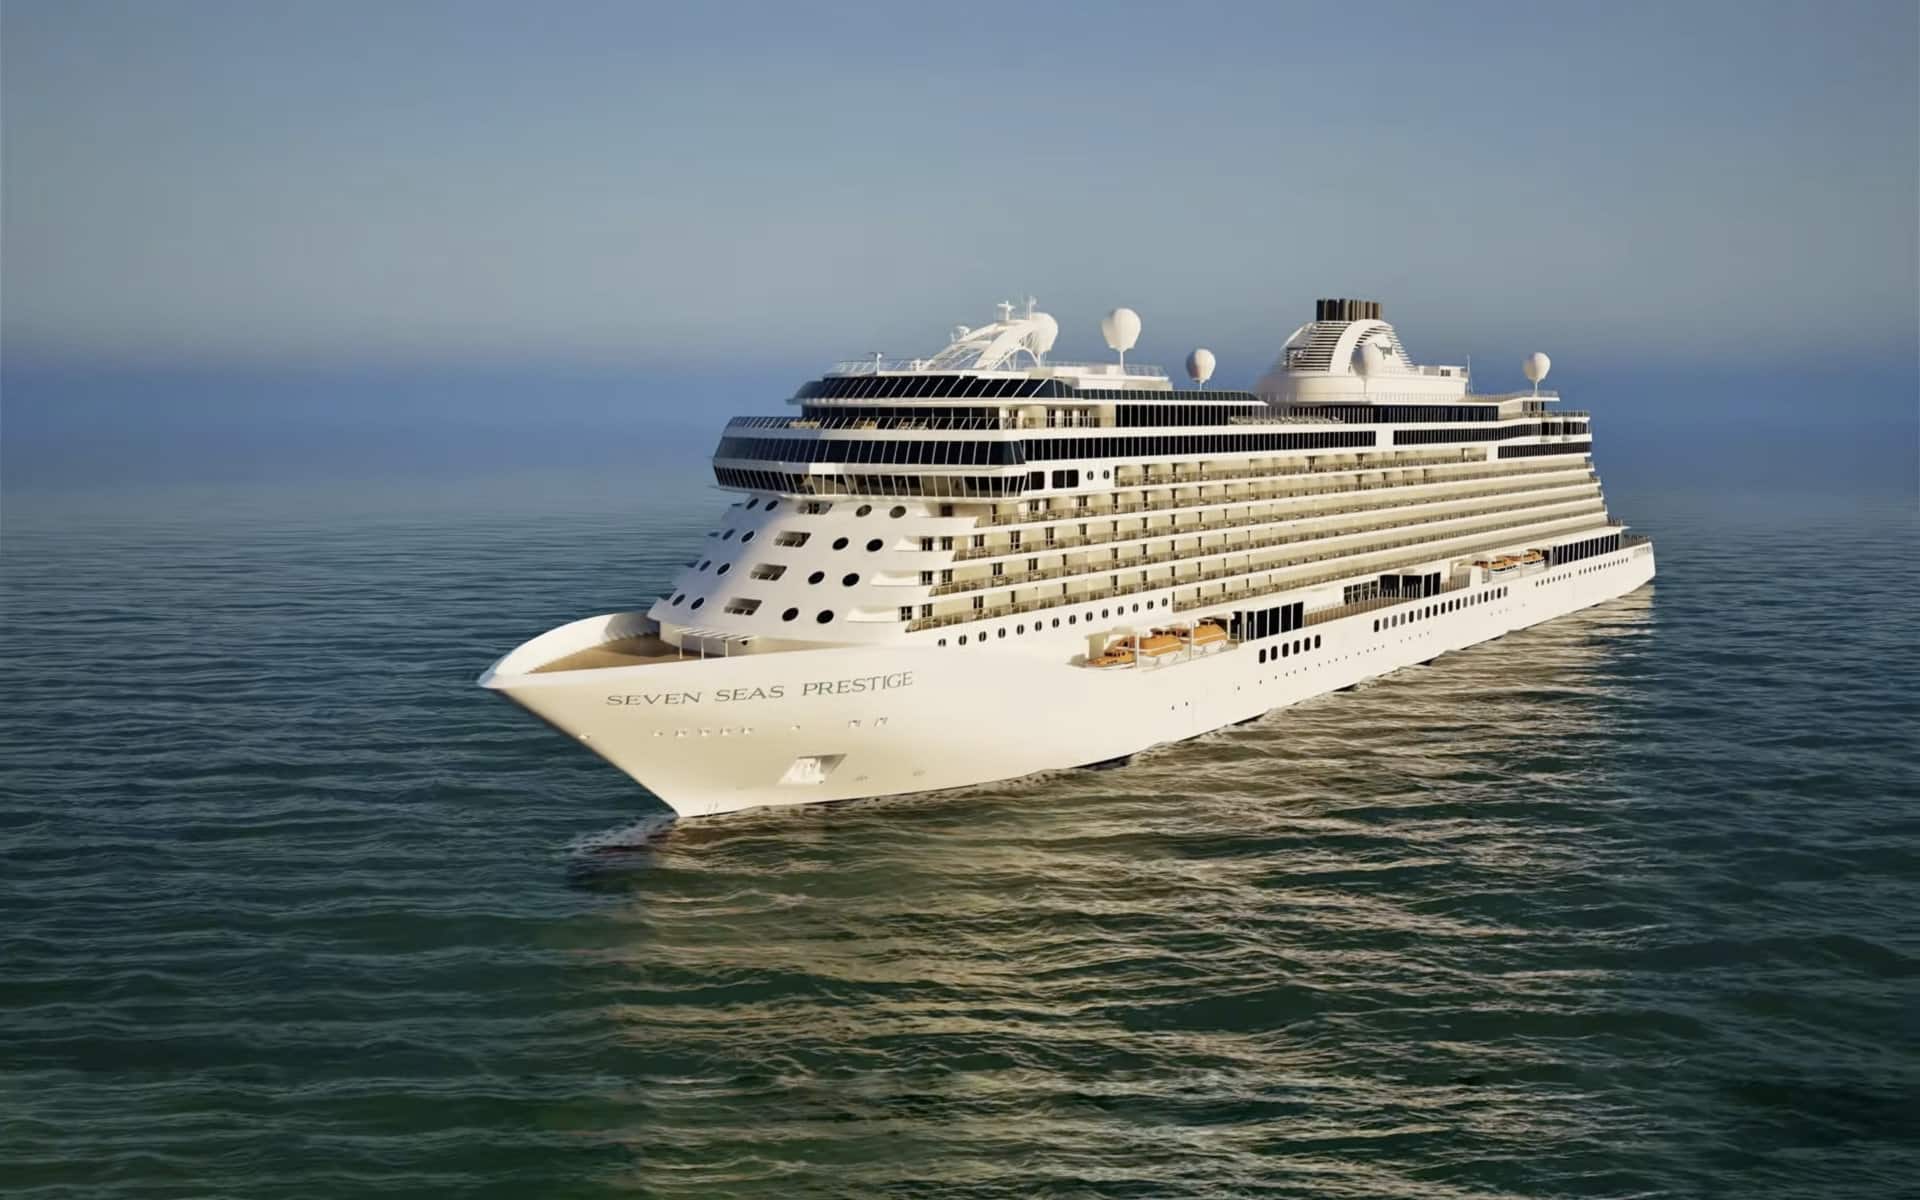 A rendering of the new Seven Seas Prestige cruise ship.